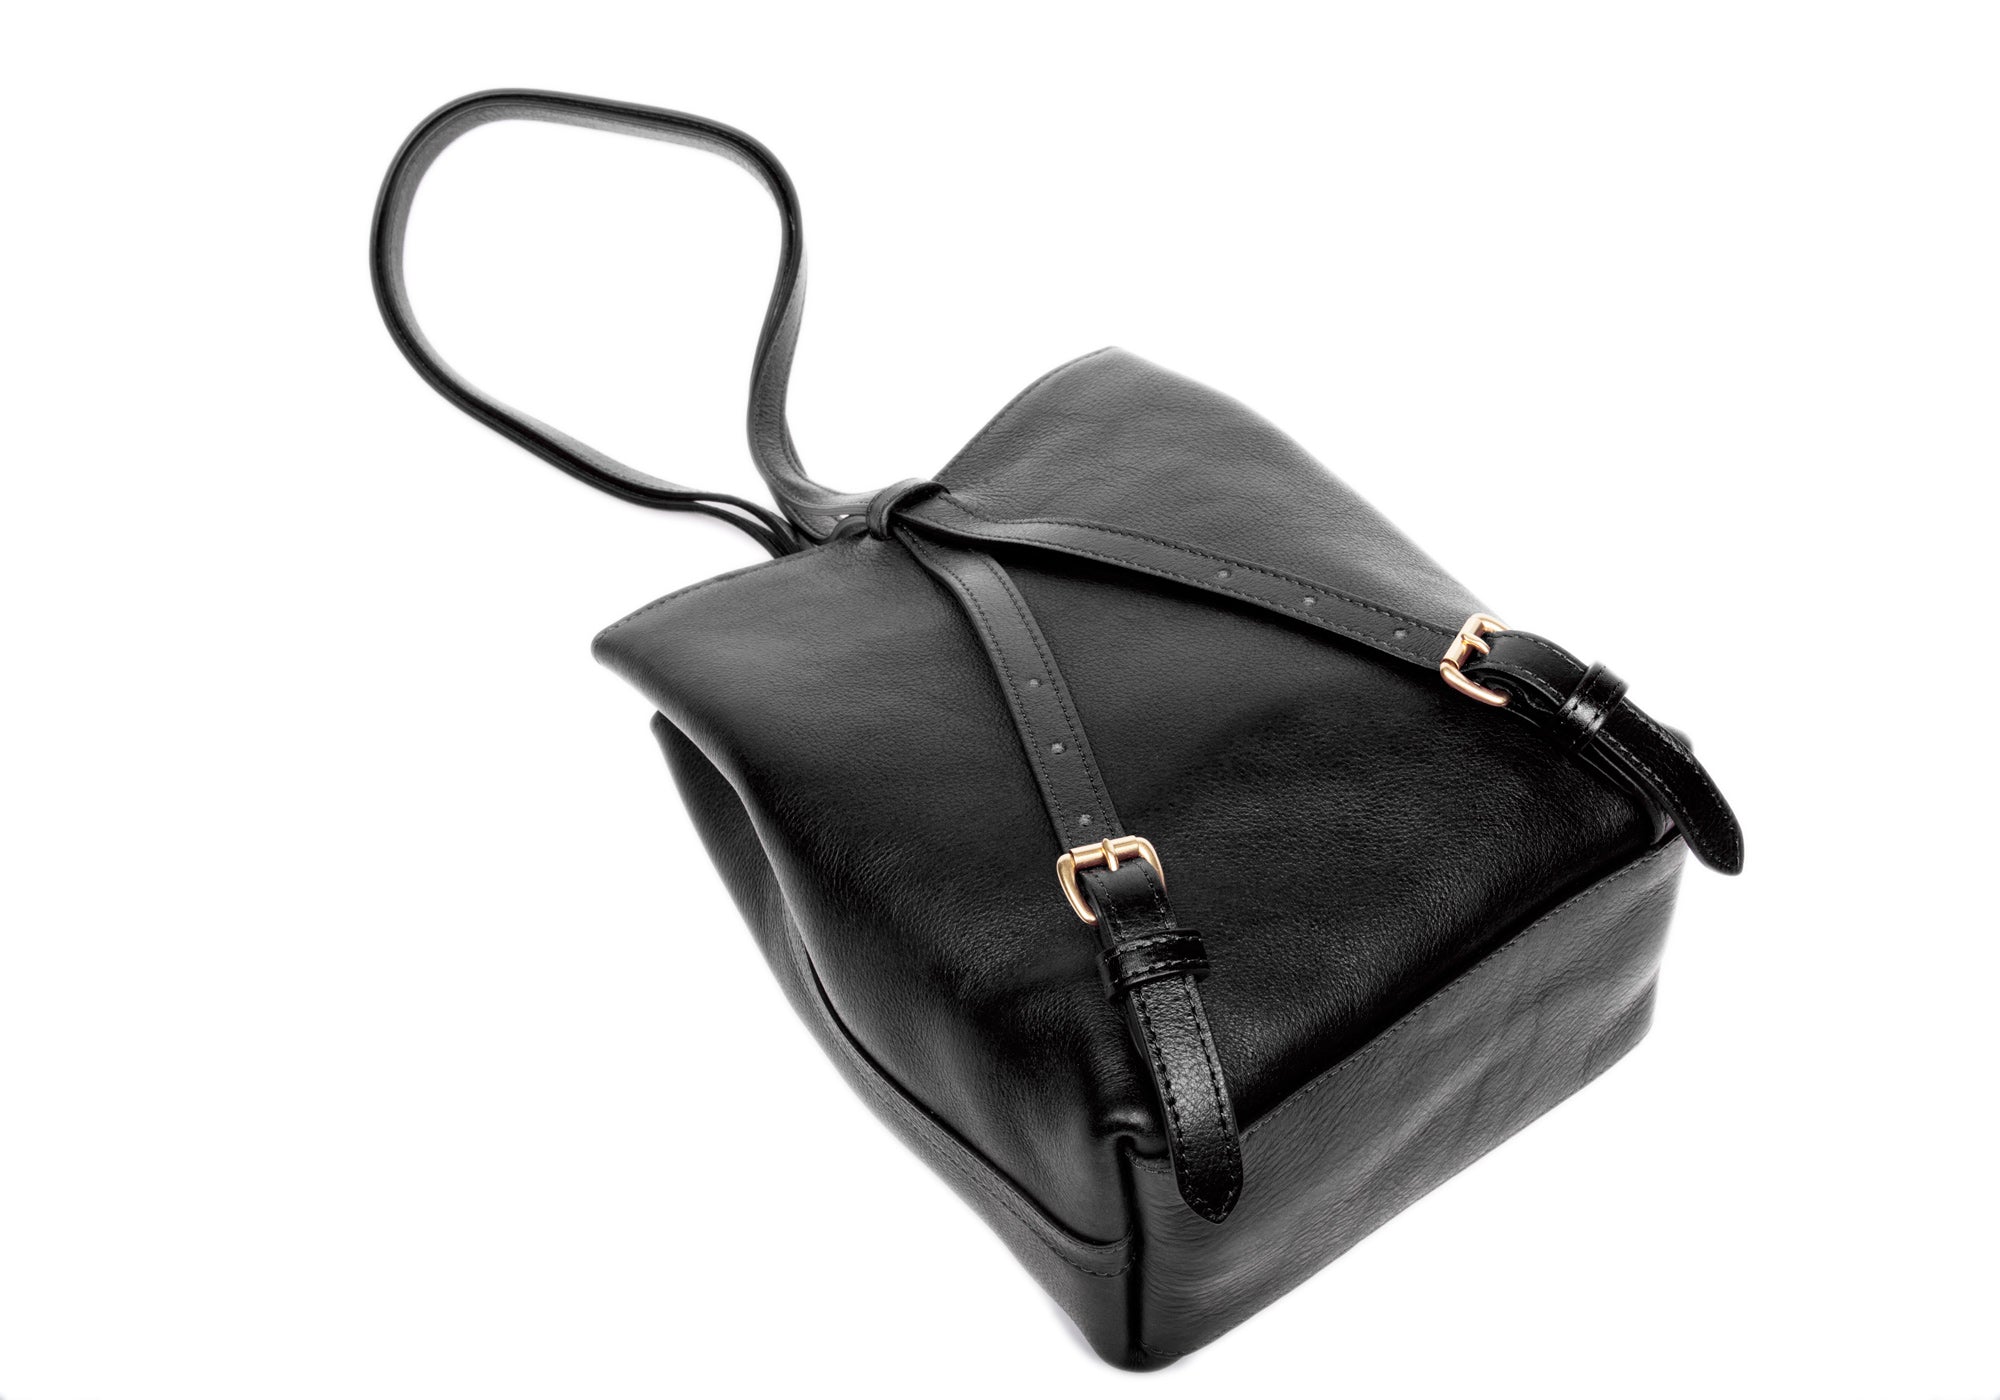 The Mini Sling Backpack Black